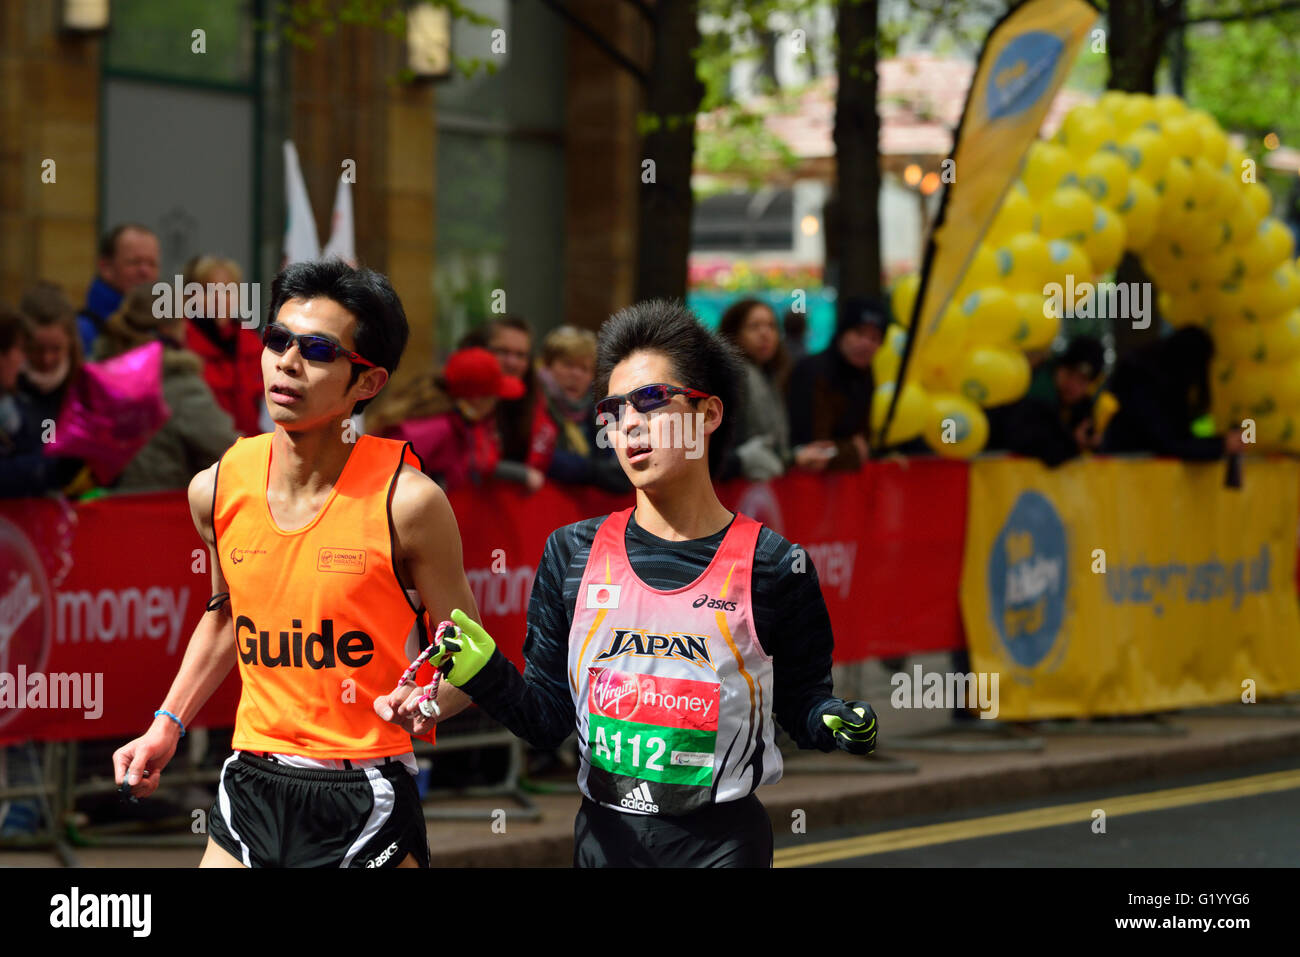 Visually impared competitor with Guide, 2016 Virgin Money London Marathon, London, United Kingdom Stock Photo